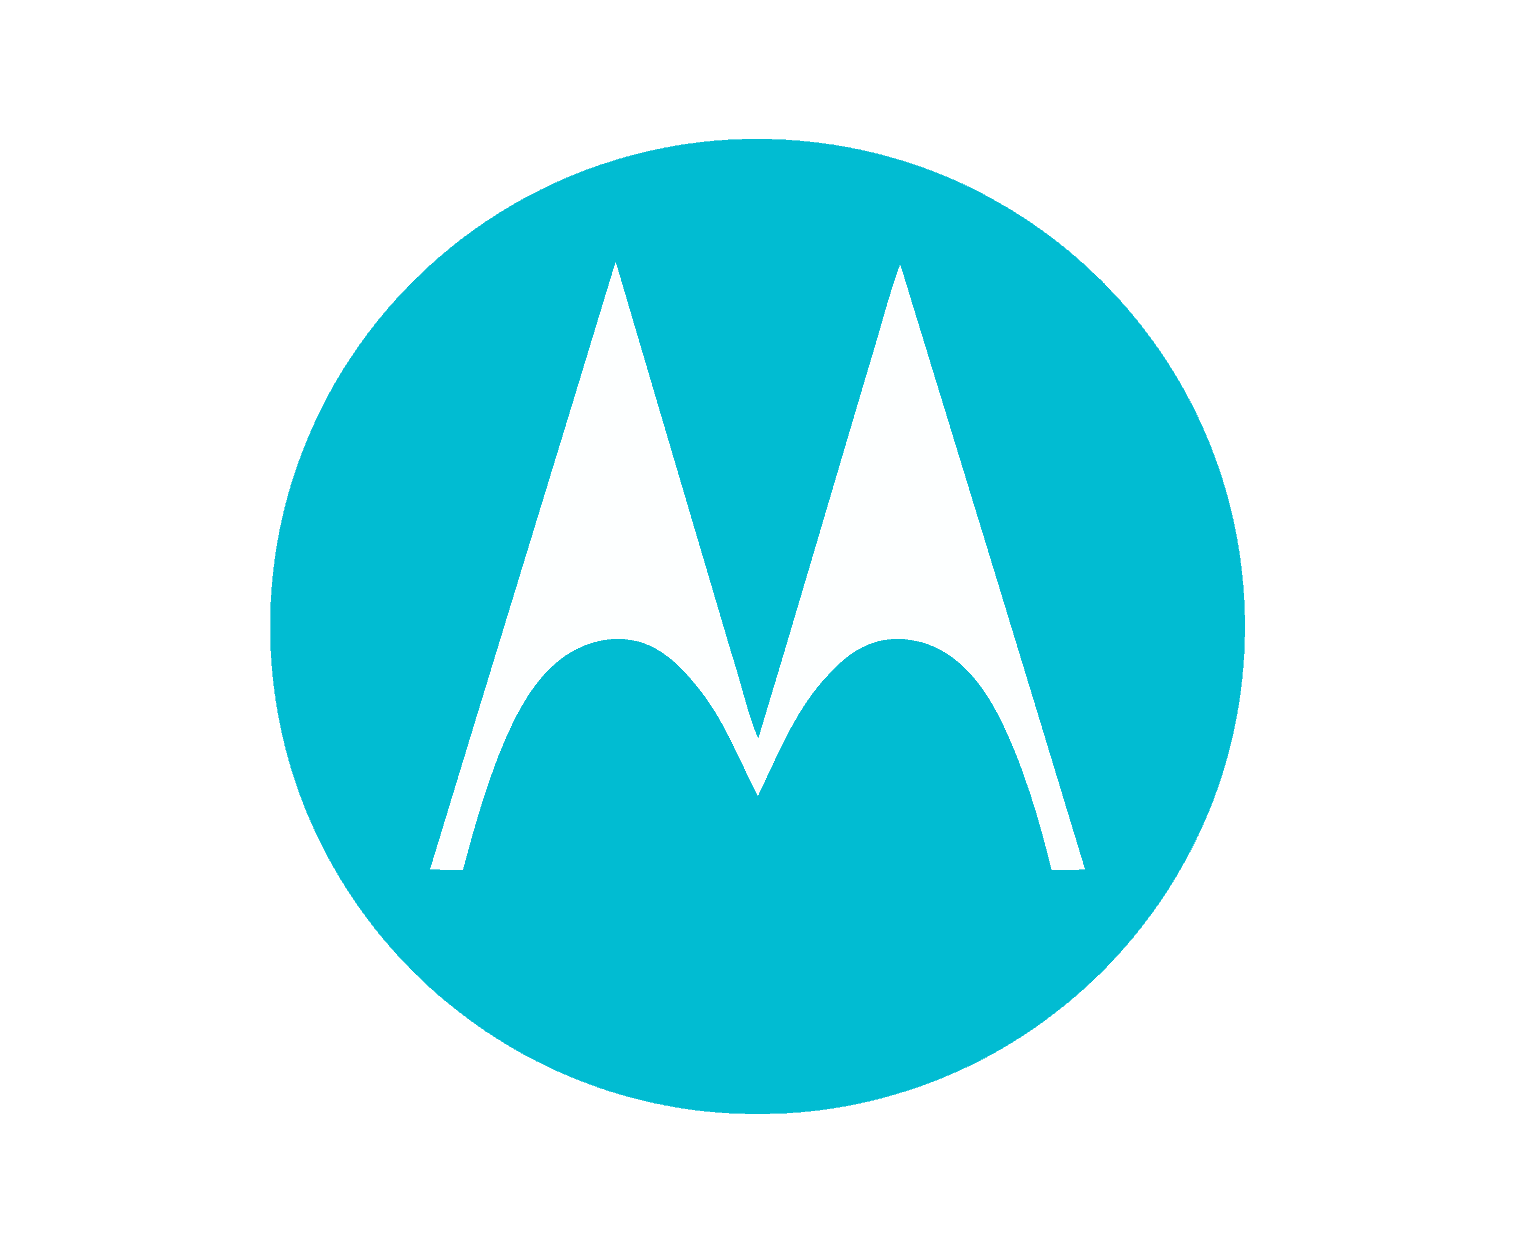 The motorola logo on a white background representing technology startups.